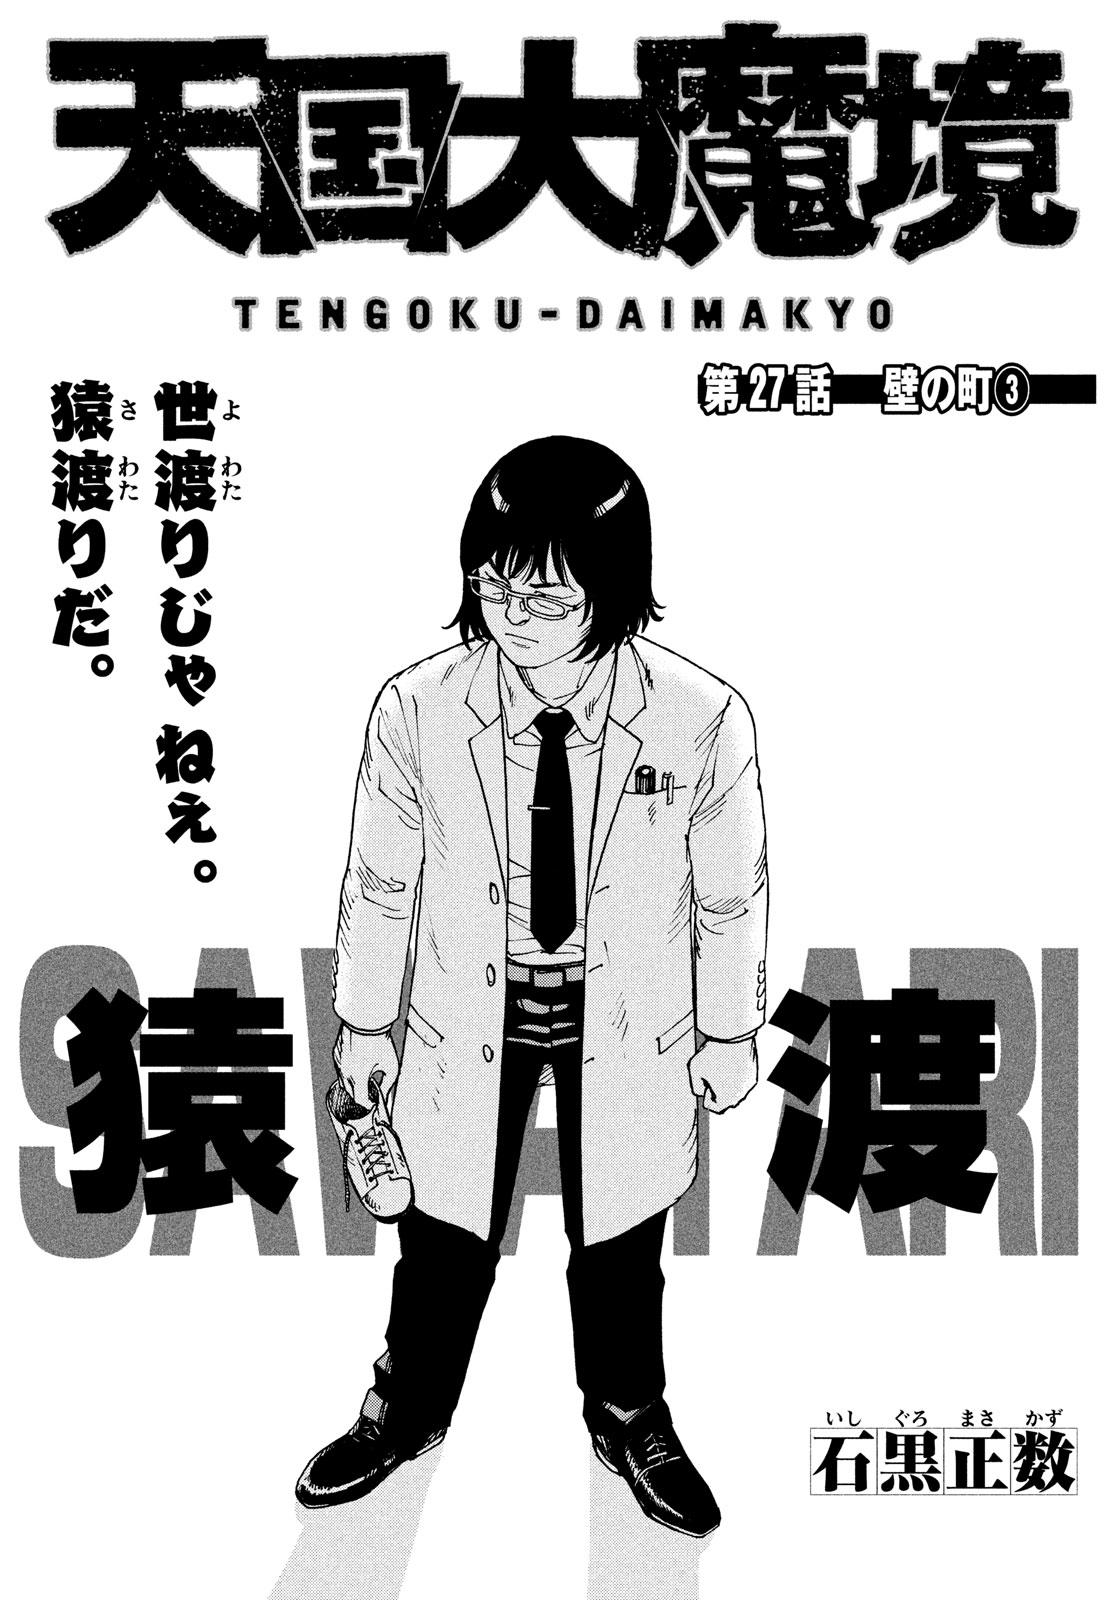 Read Tengoku Daimakyou Chapter 38: Dream Of Hell ➀ - Manganelo